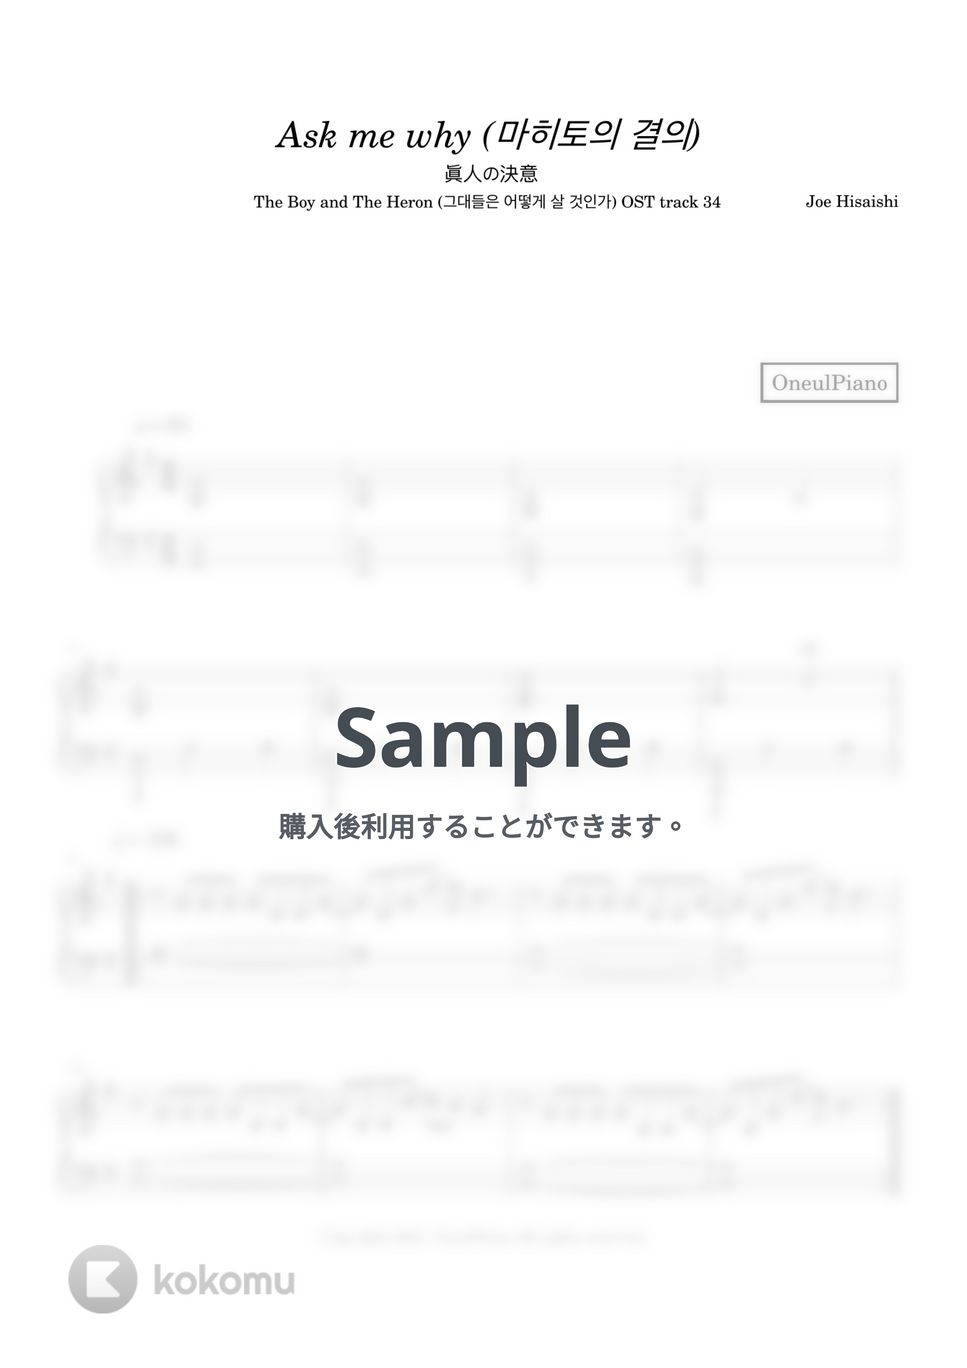 Joe Hisaishi - Ask me why (眞人の決意, Mahito's Commitment, 마히토의 결의) (君たちはどう生きるか OST track 34) by 今日ピアノ(Oneul Piano)